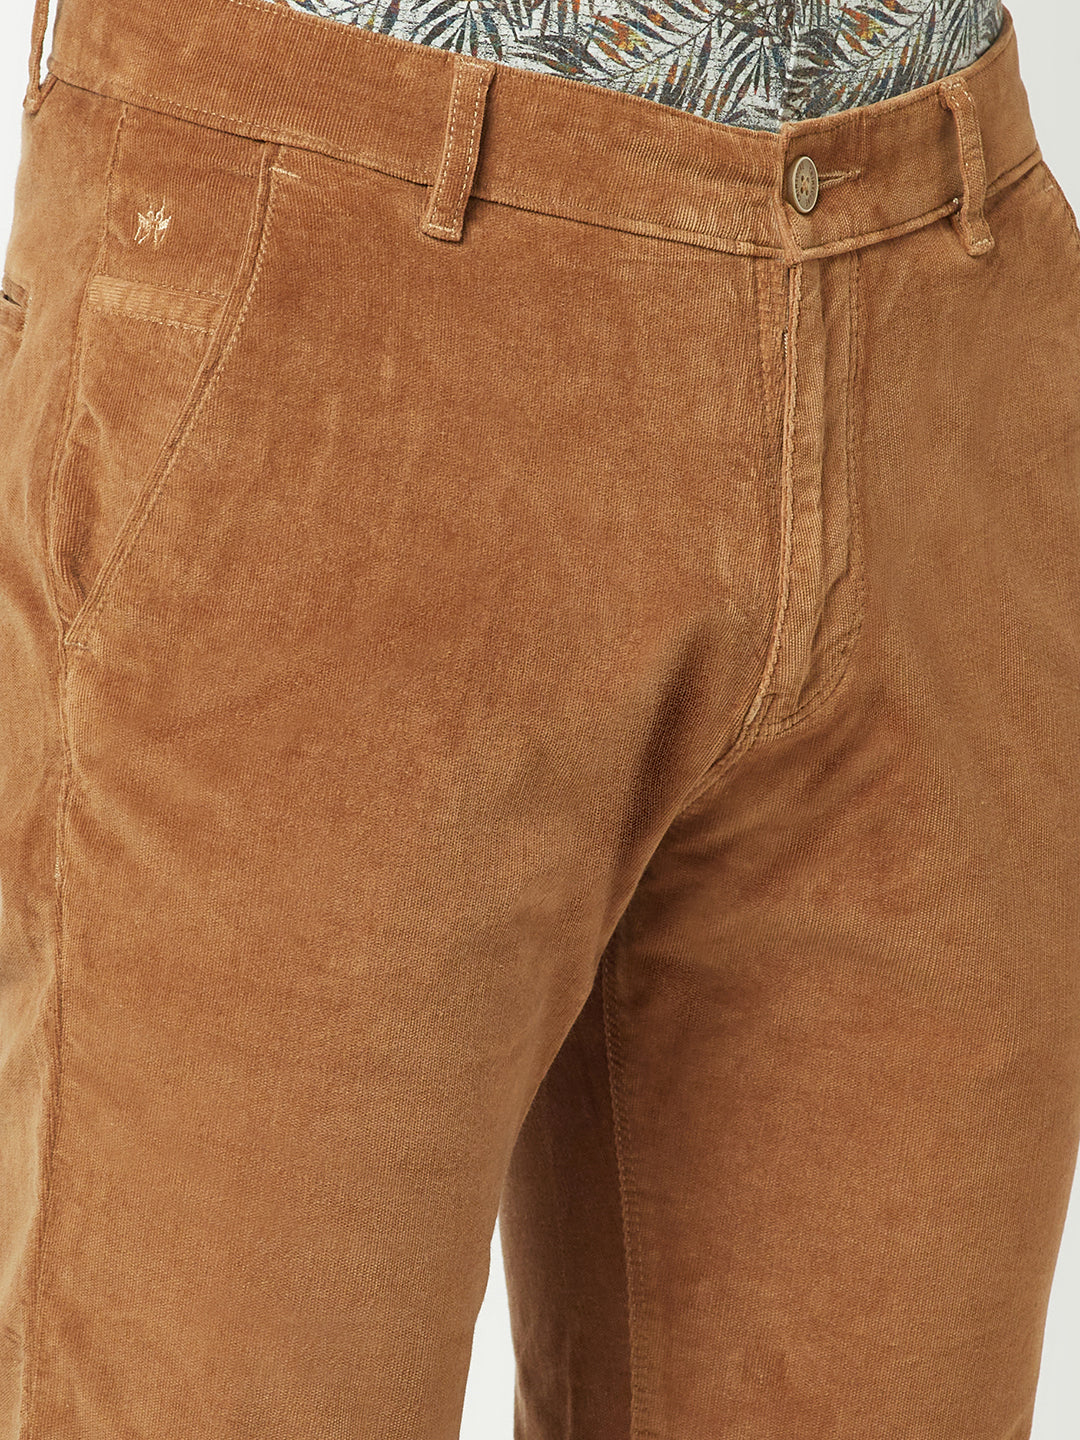 Cotton Brown Corduroy Pants For Men